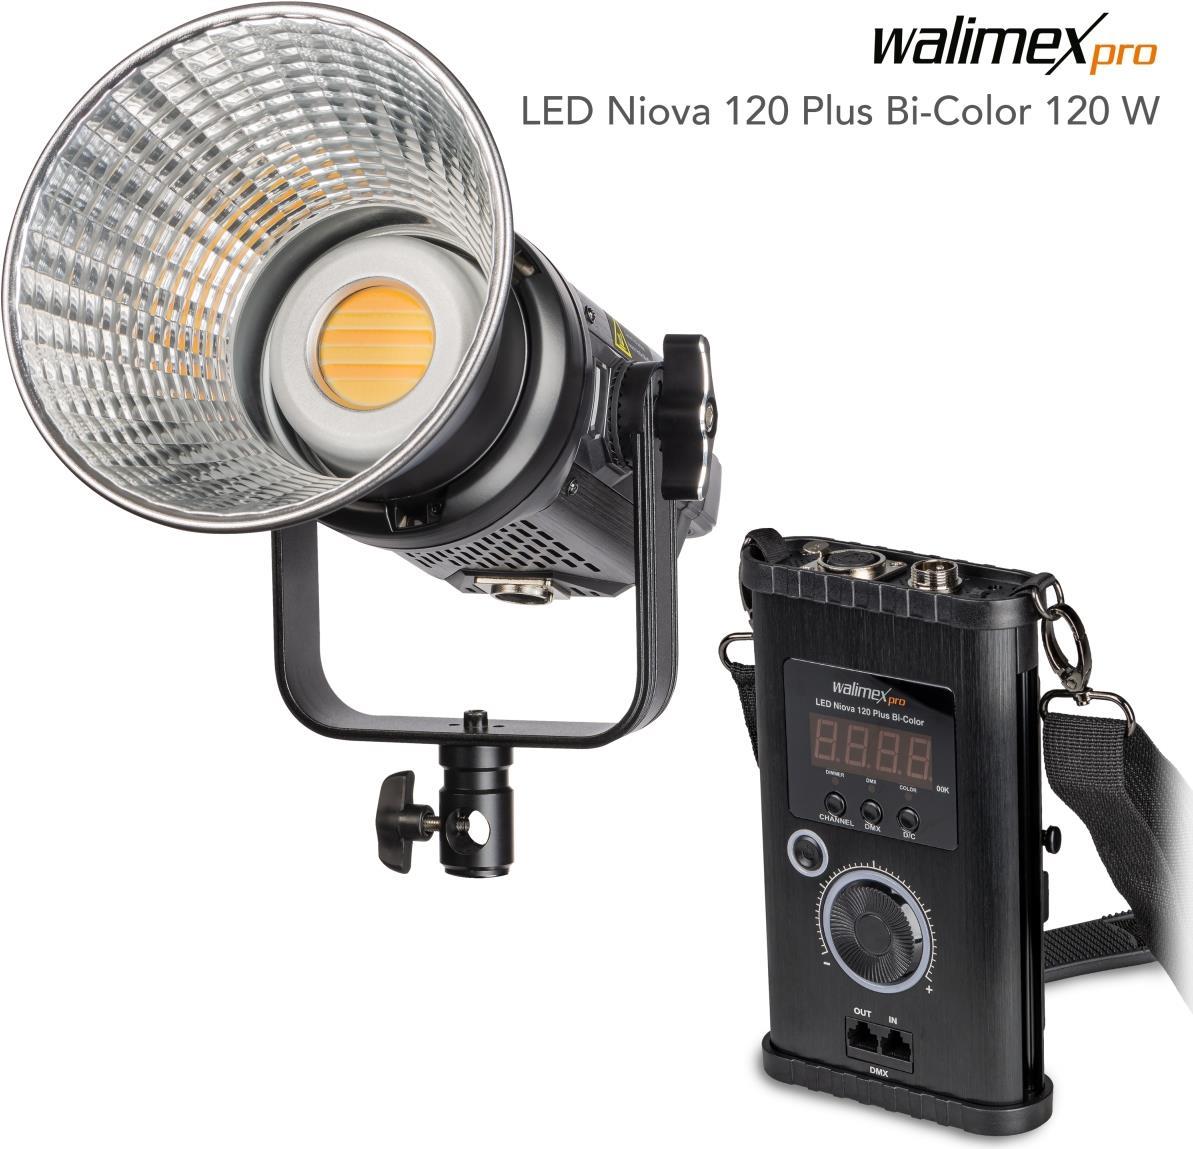 WALSER Walimex pro LED Niova 120 Plus Bi-Color 120W (23101)